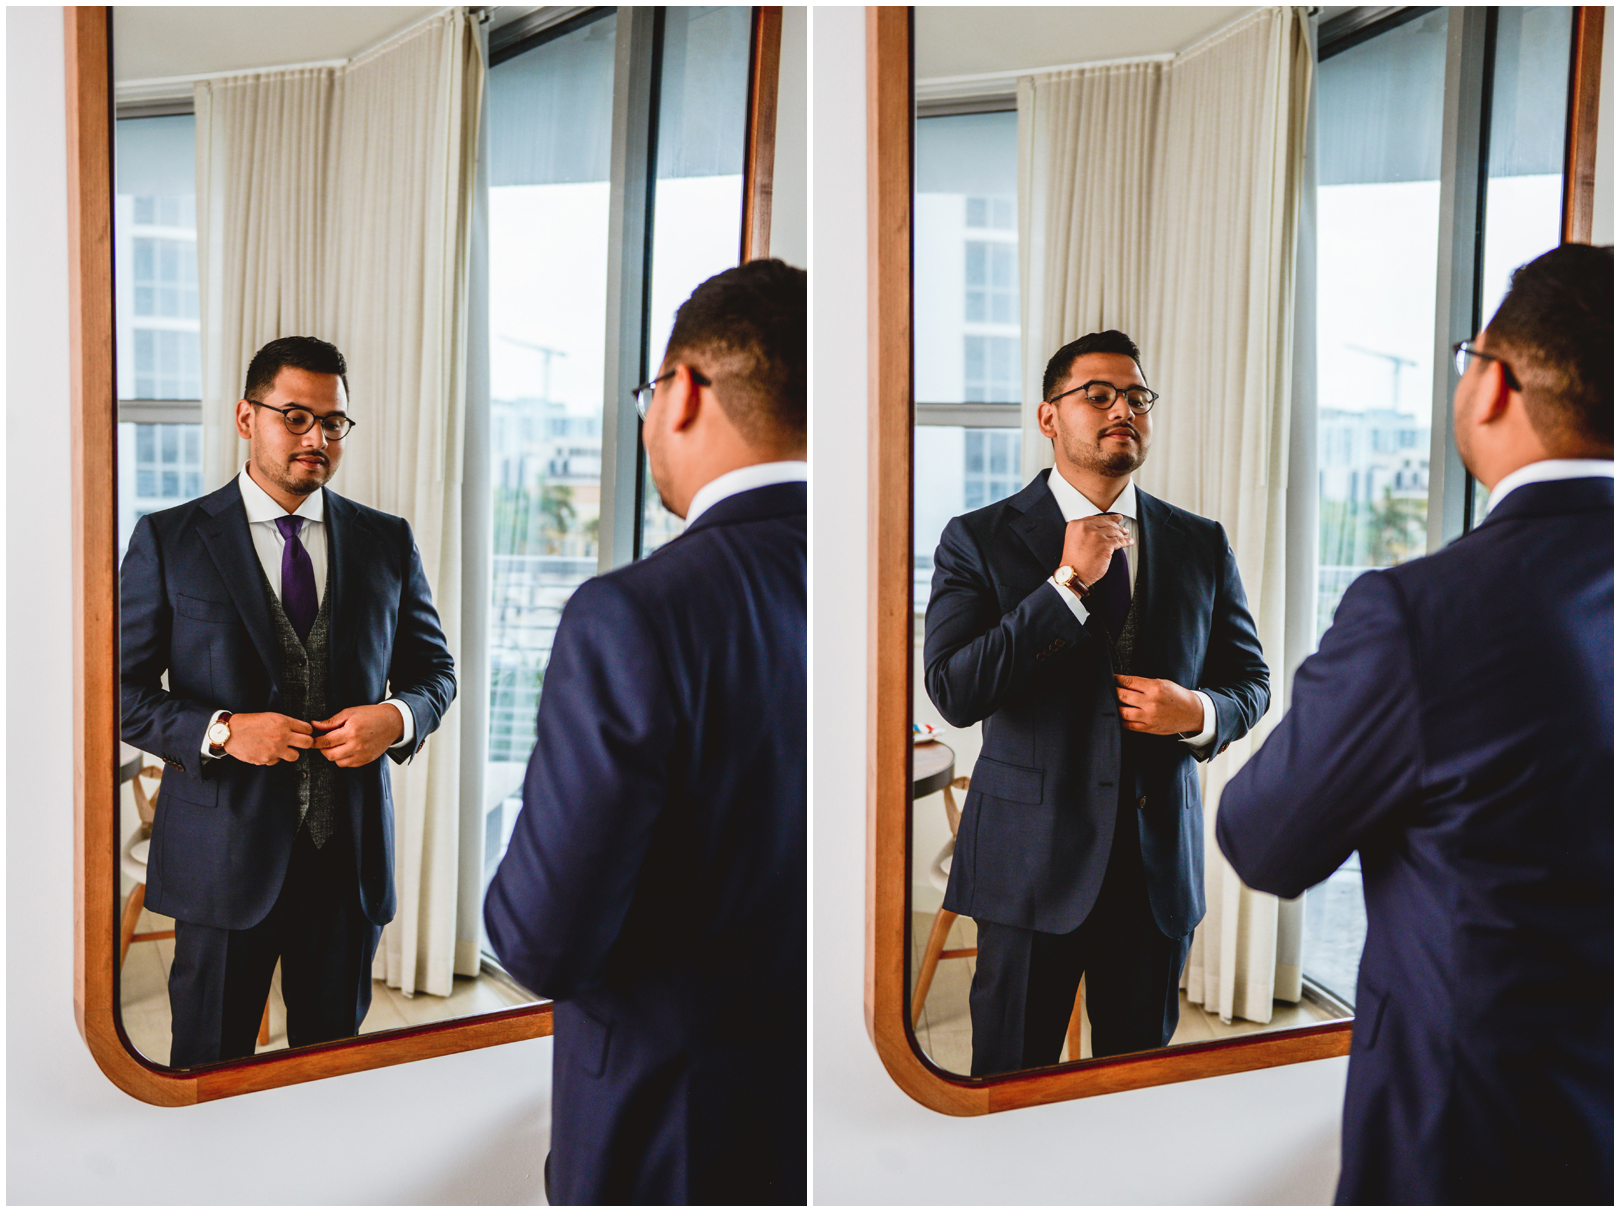 mirror, reflection, tux, wedding, man